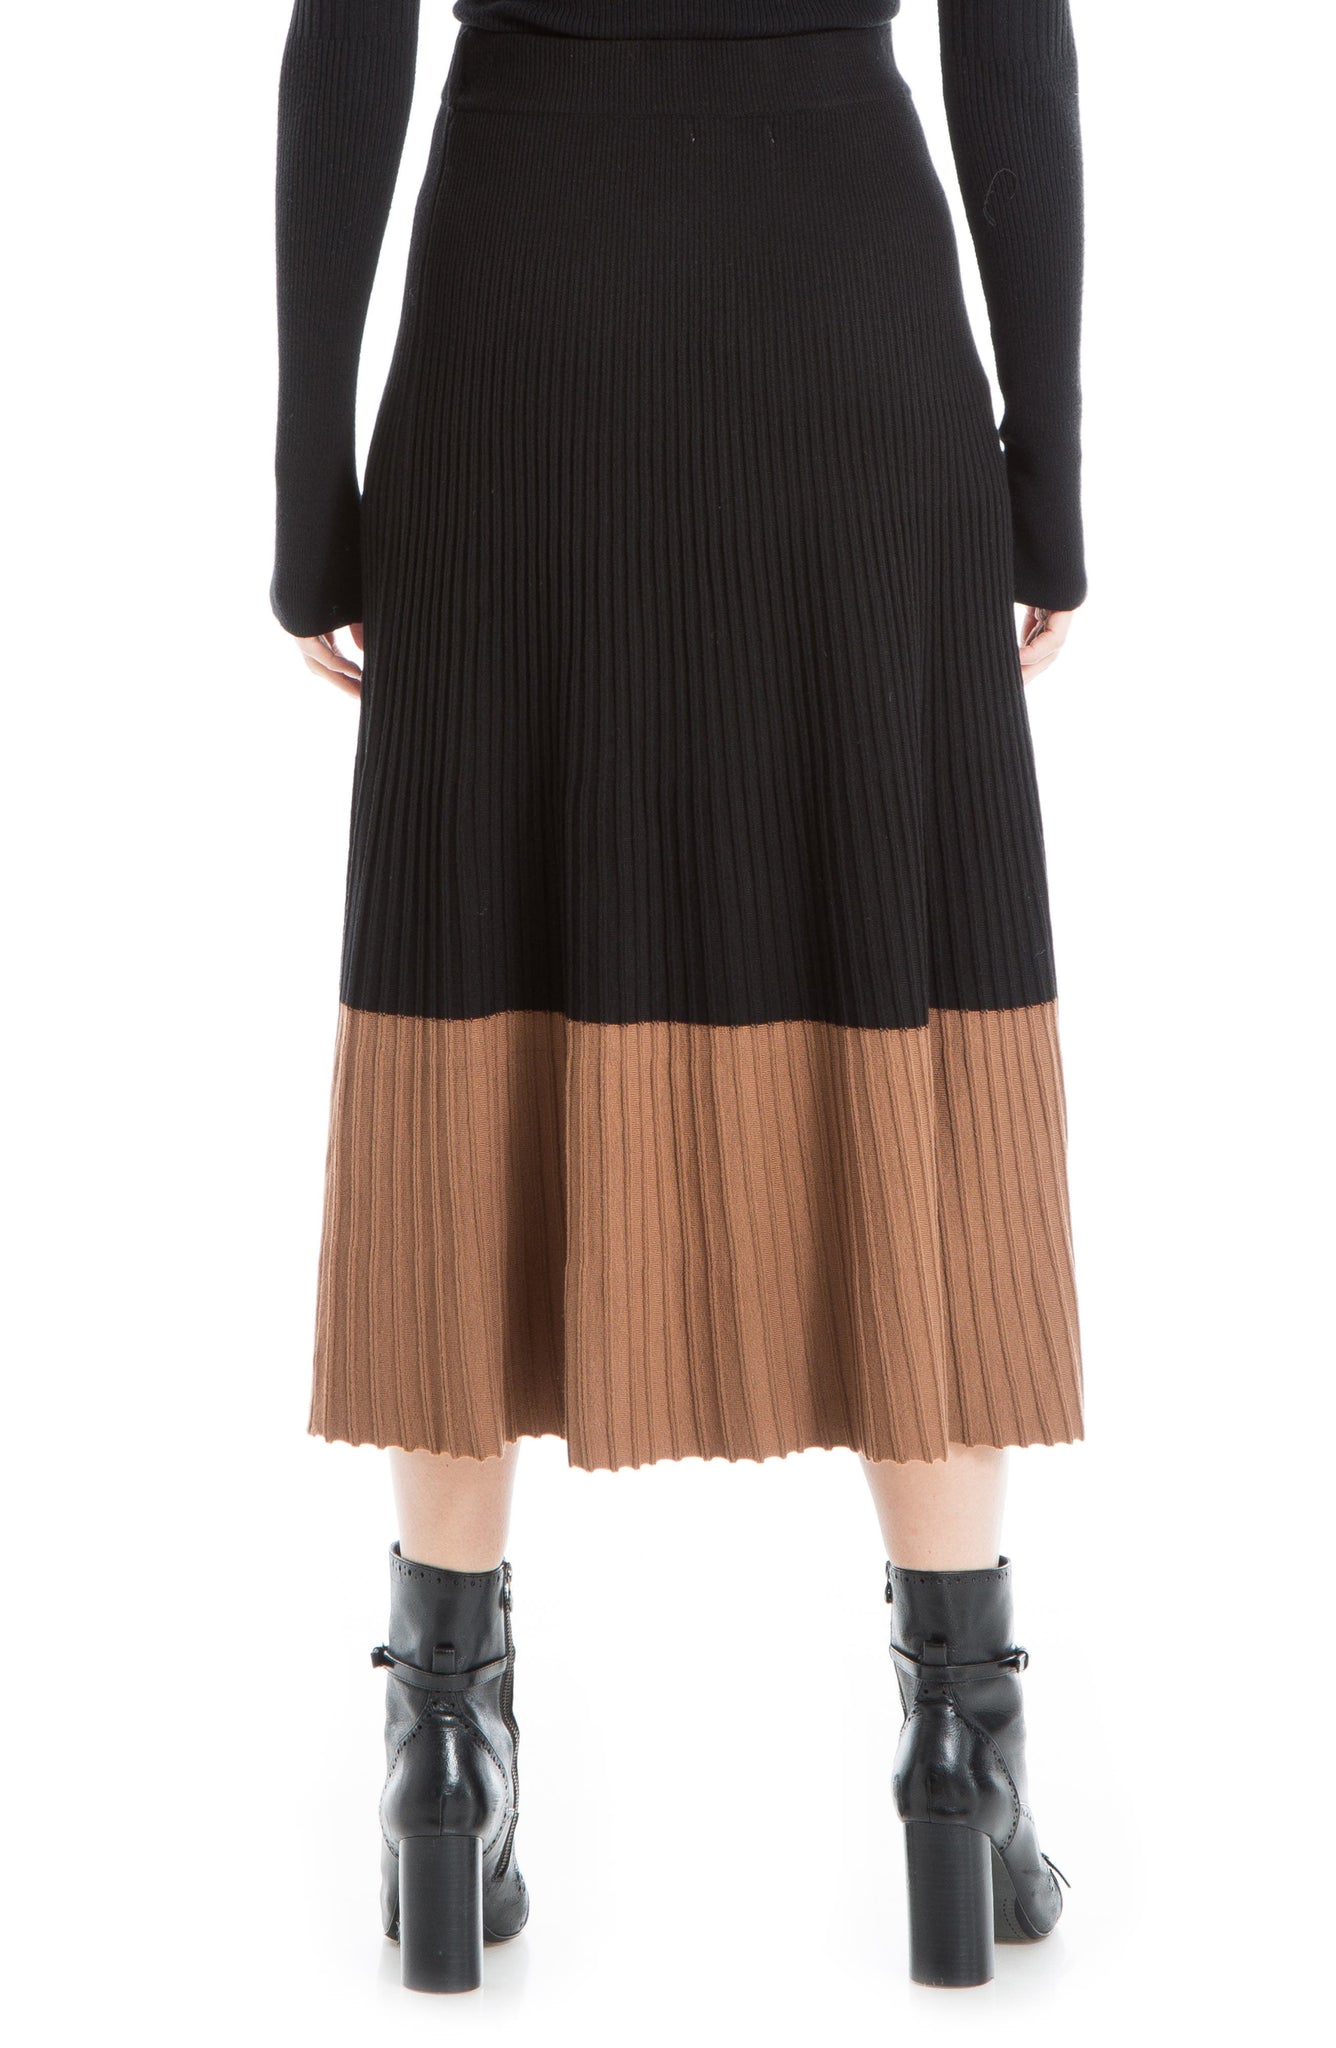 MAXSTUDIO Pleated Colorblock Knit Skirt, Main, color, BLACK/ VICUNA